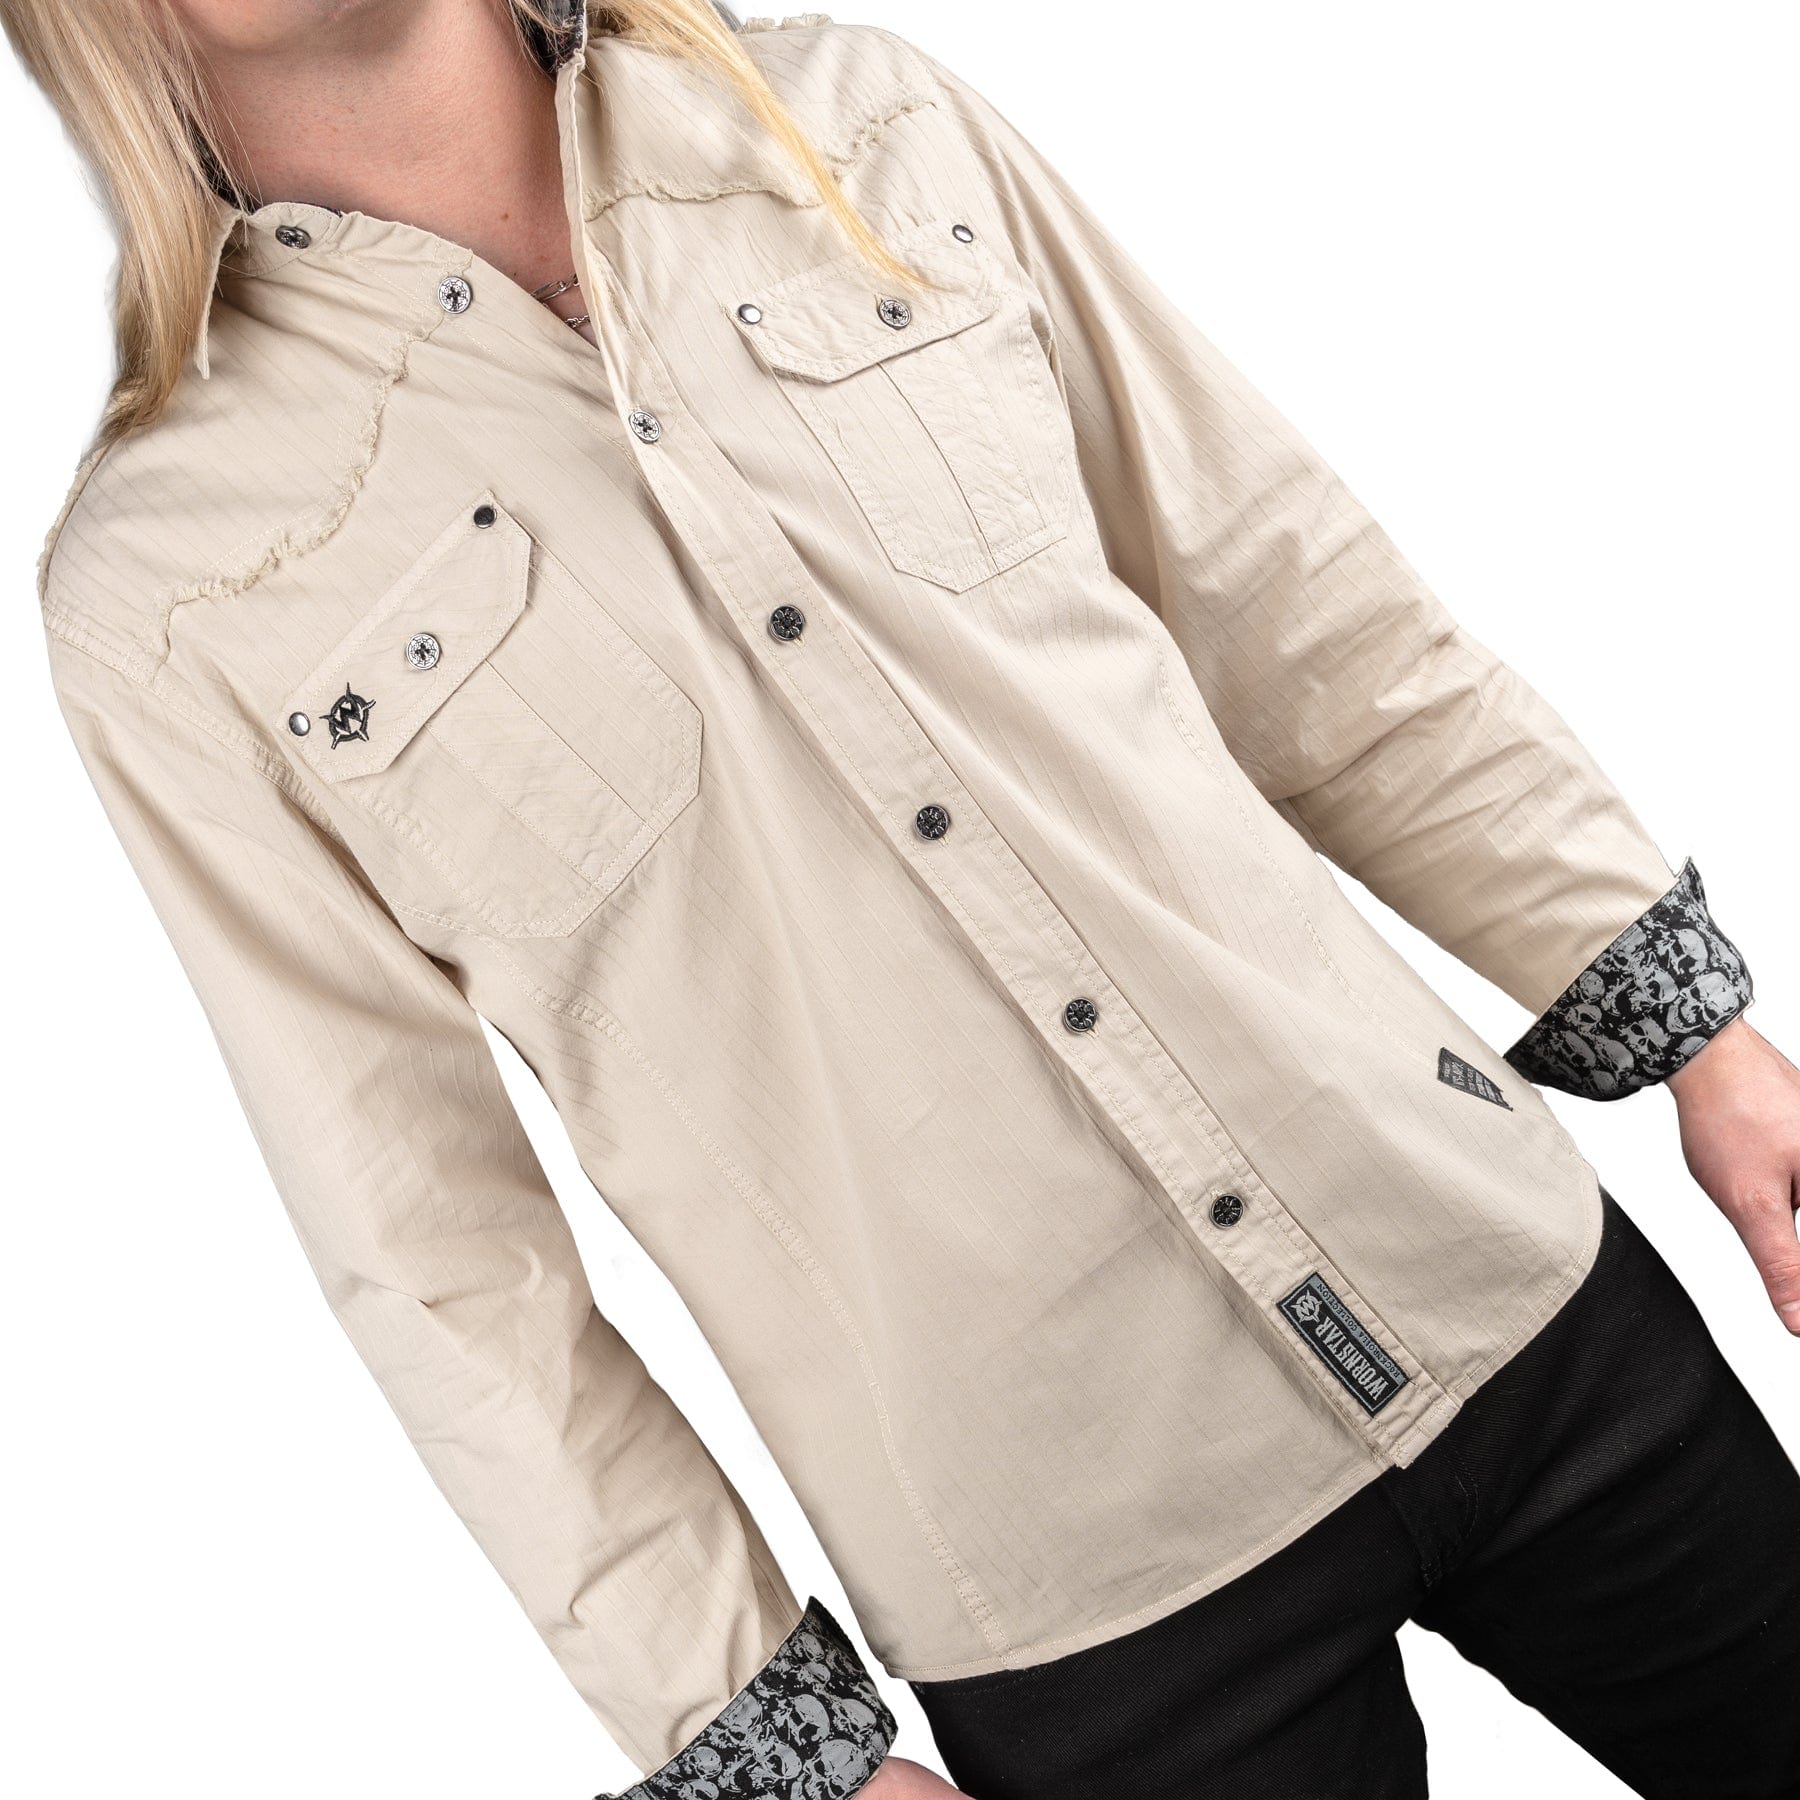 Wornstar Clothing Mens Shirt. Button Down Raider Long Sleeve Shirt - Sand